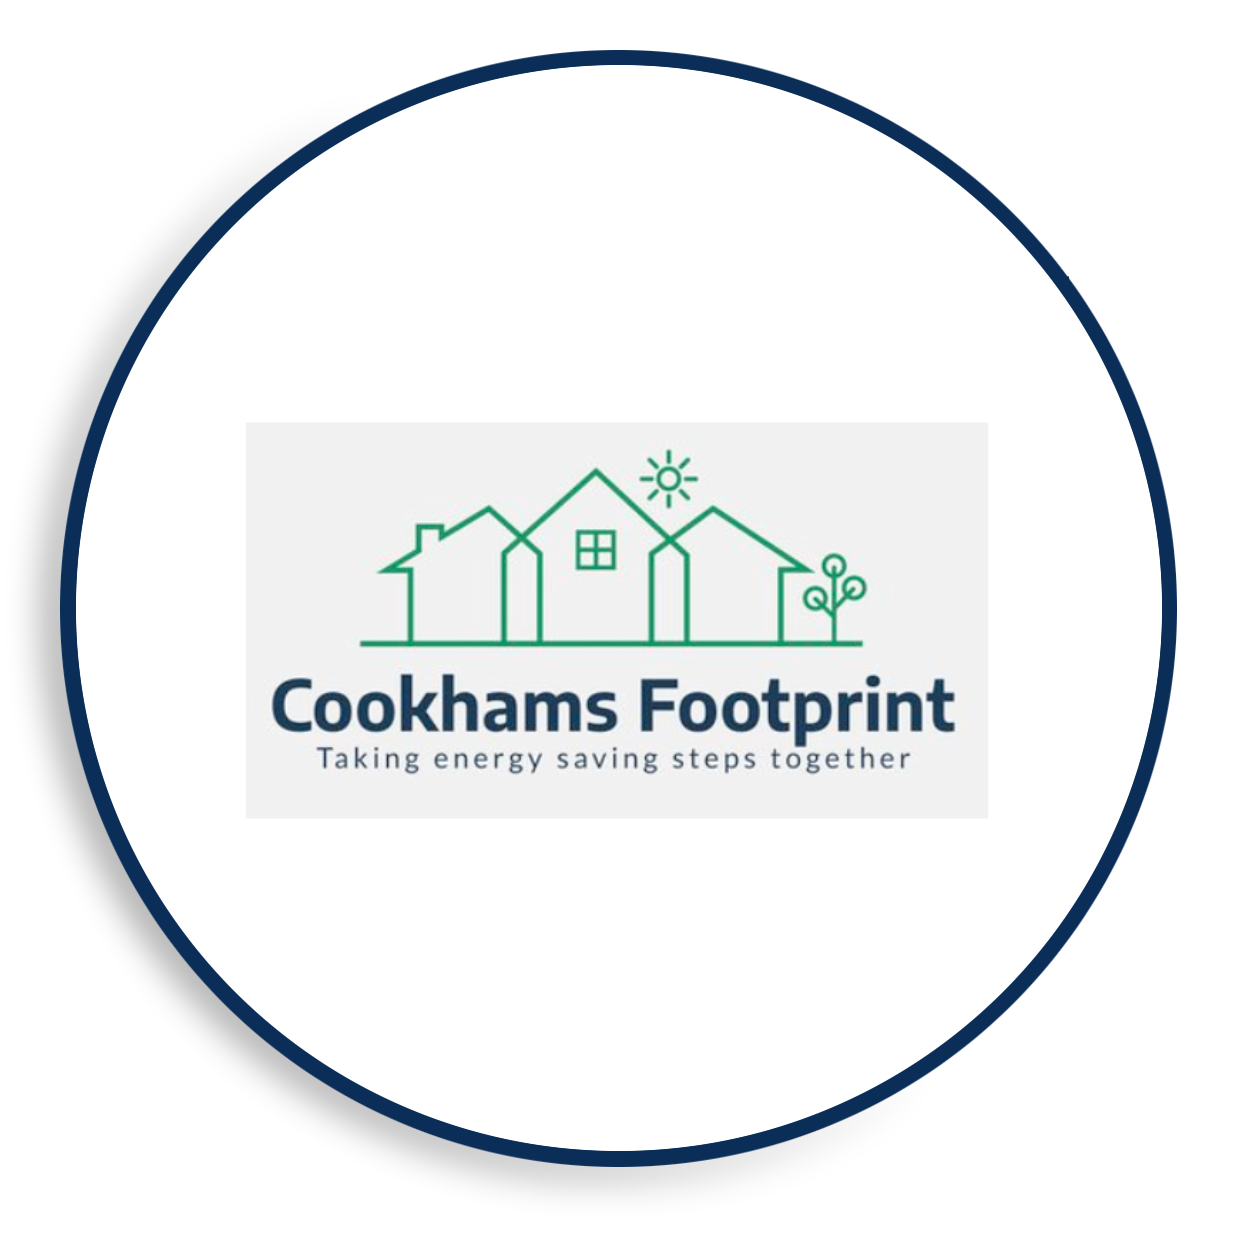 Cookhams Footprint